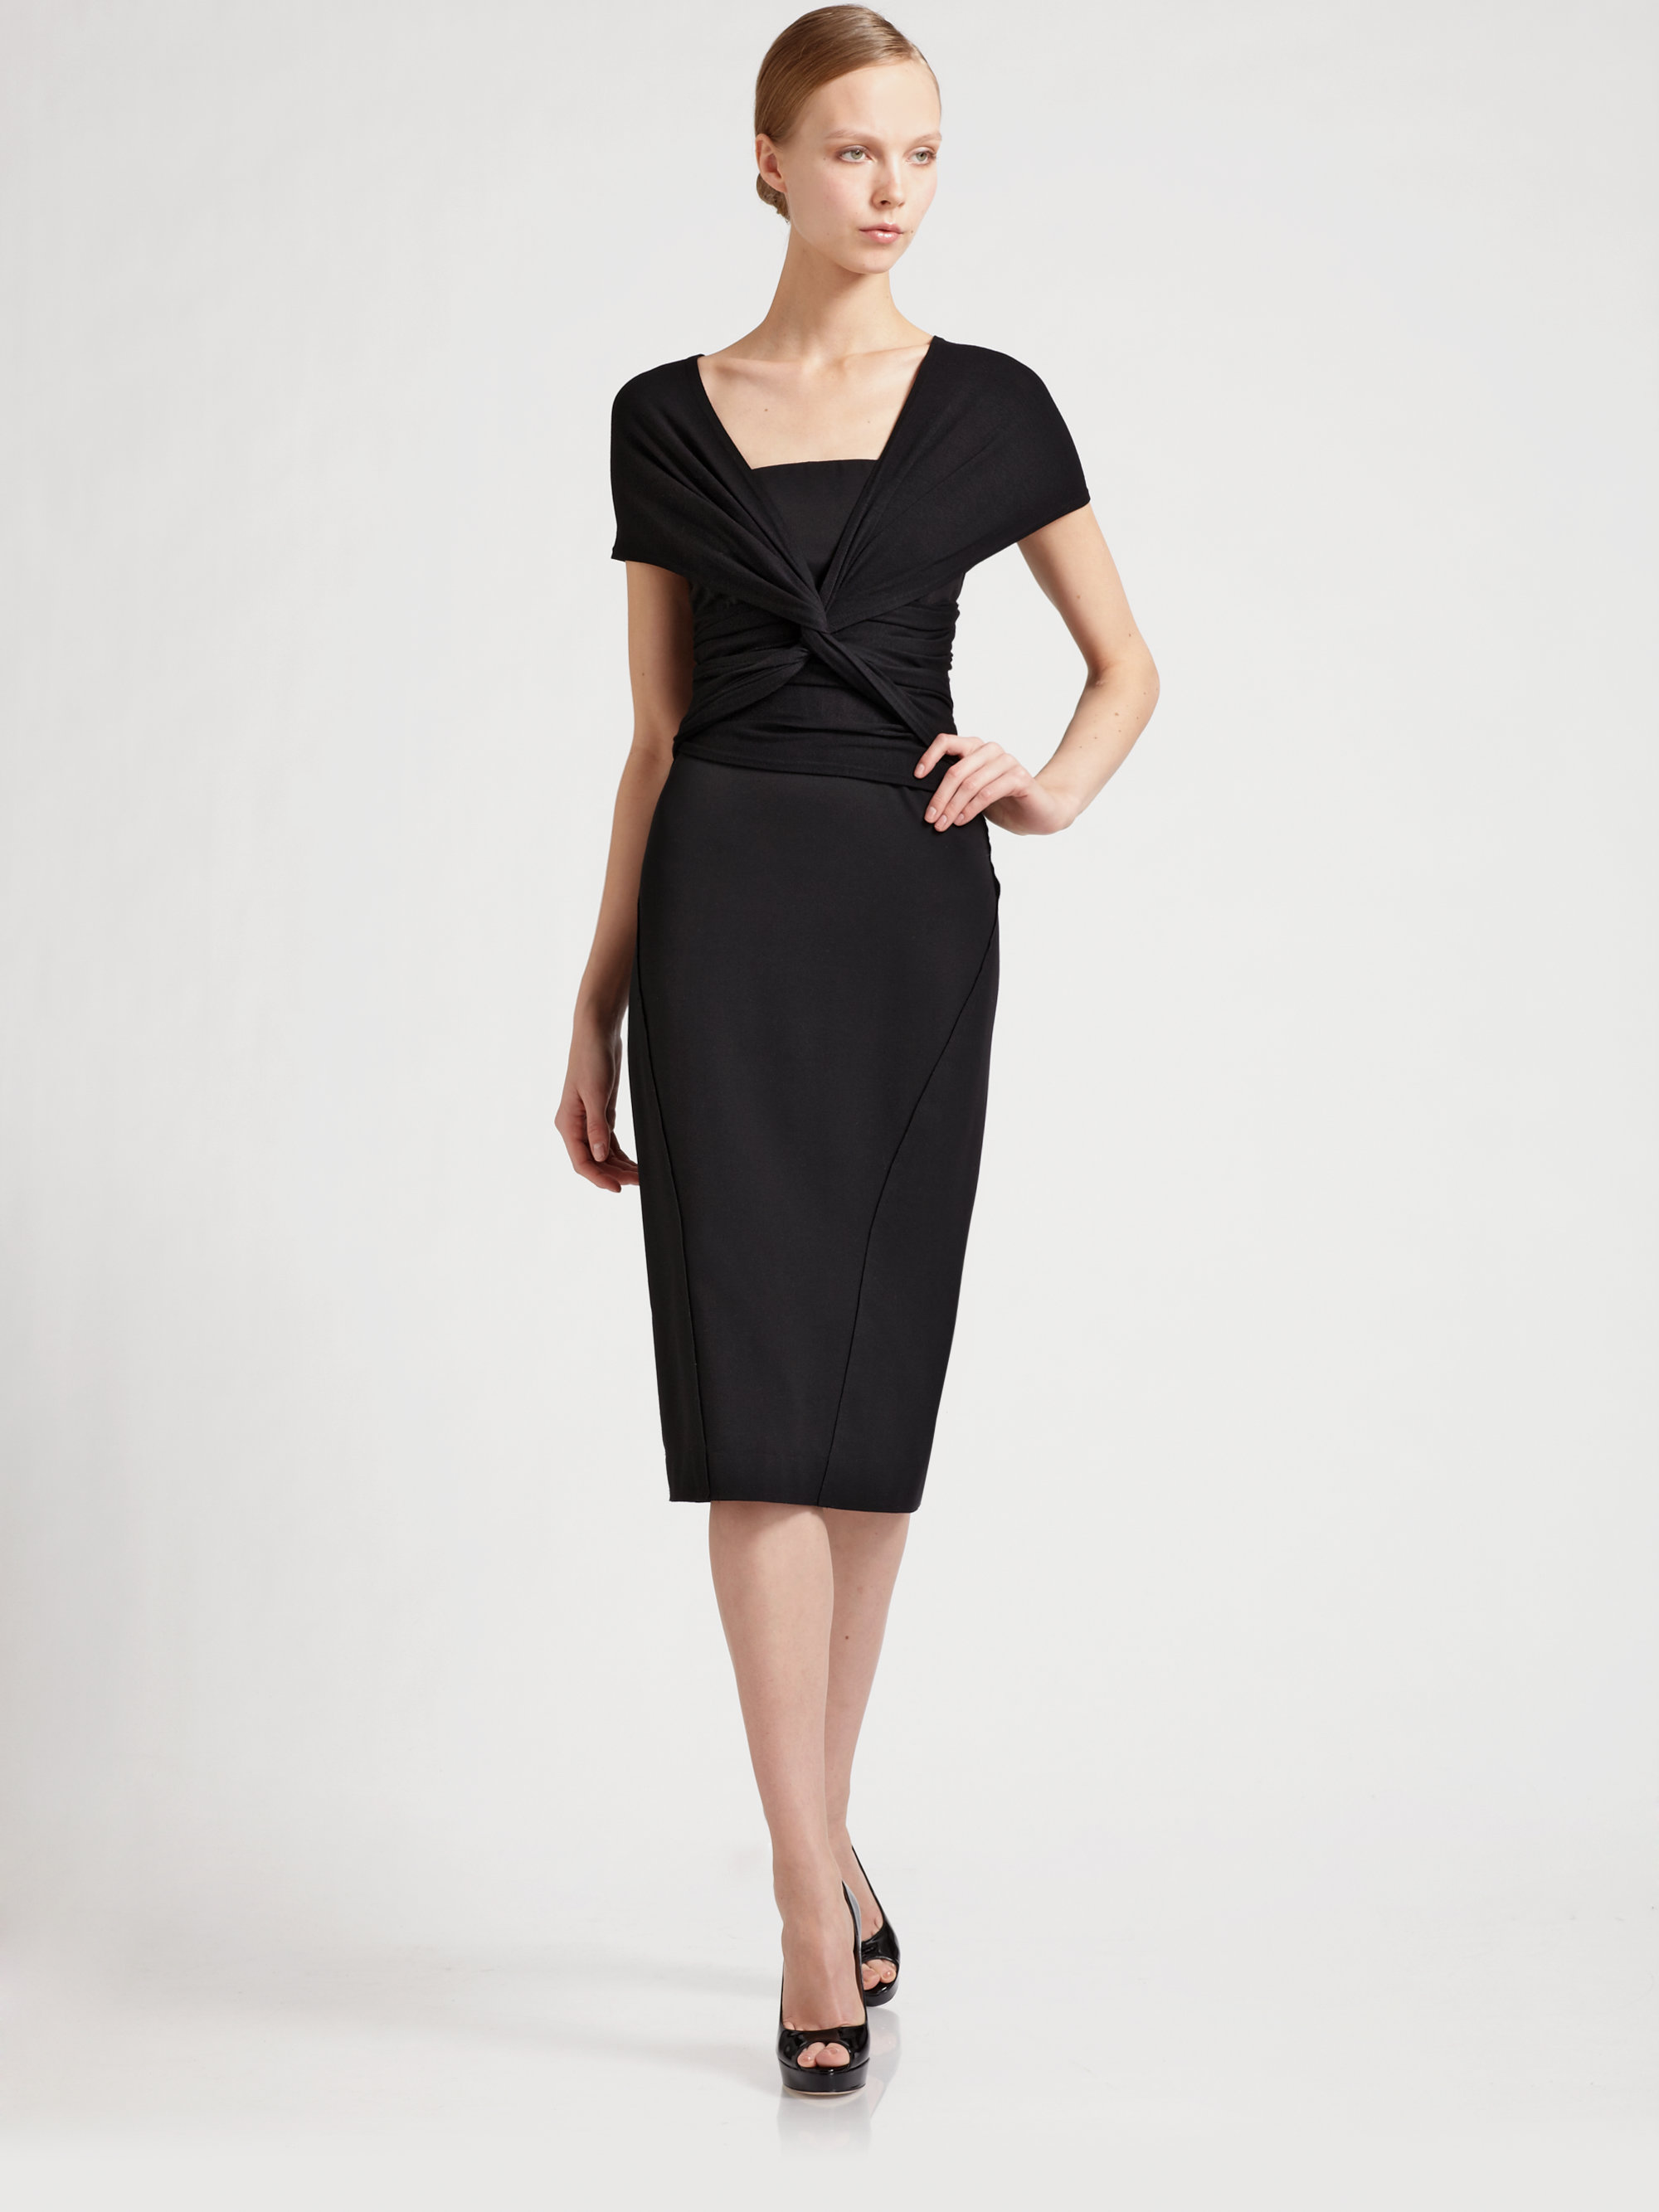 Donna Karan Sculpted Infinity Dress in Black - Lyst